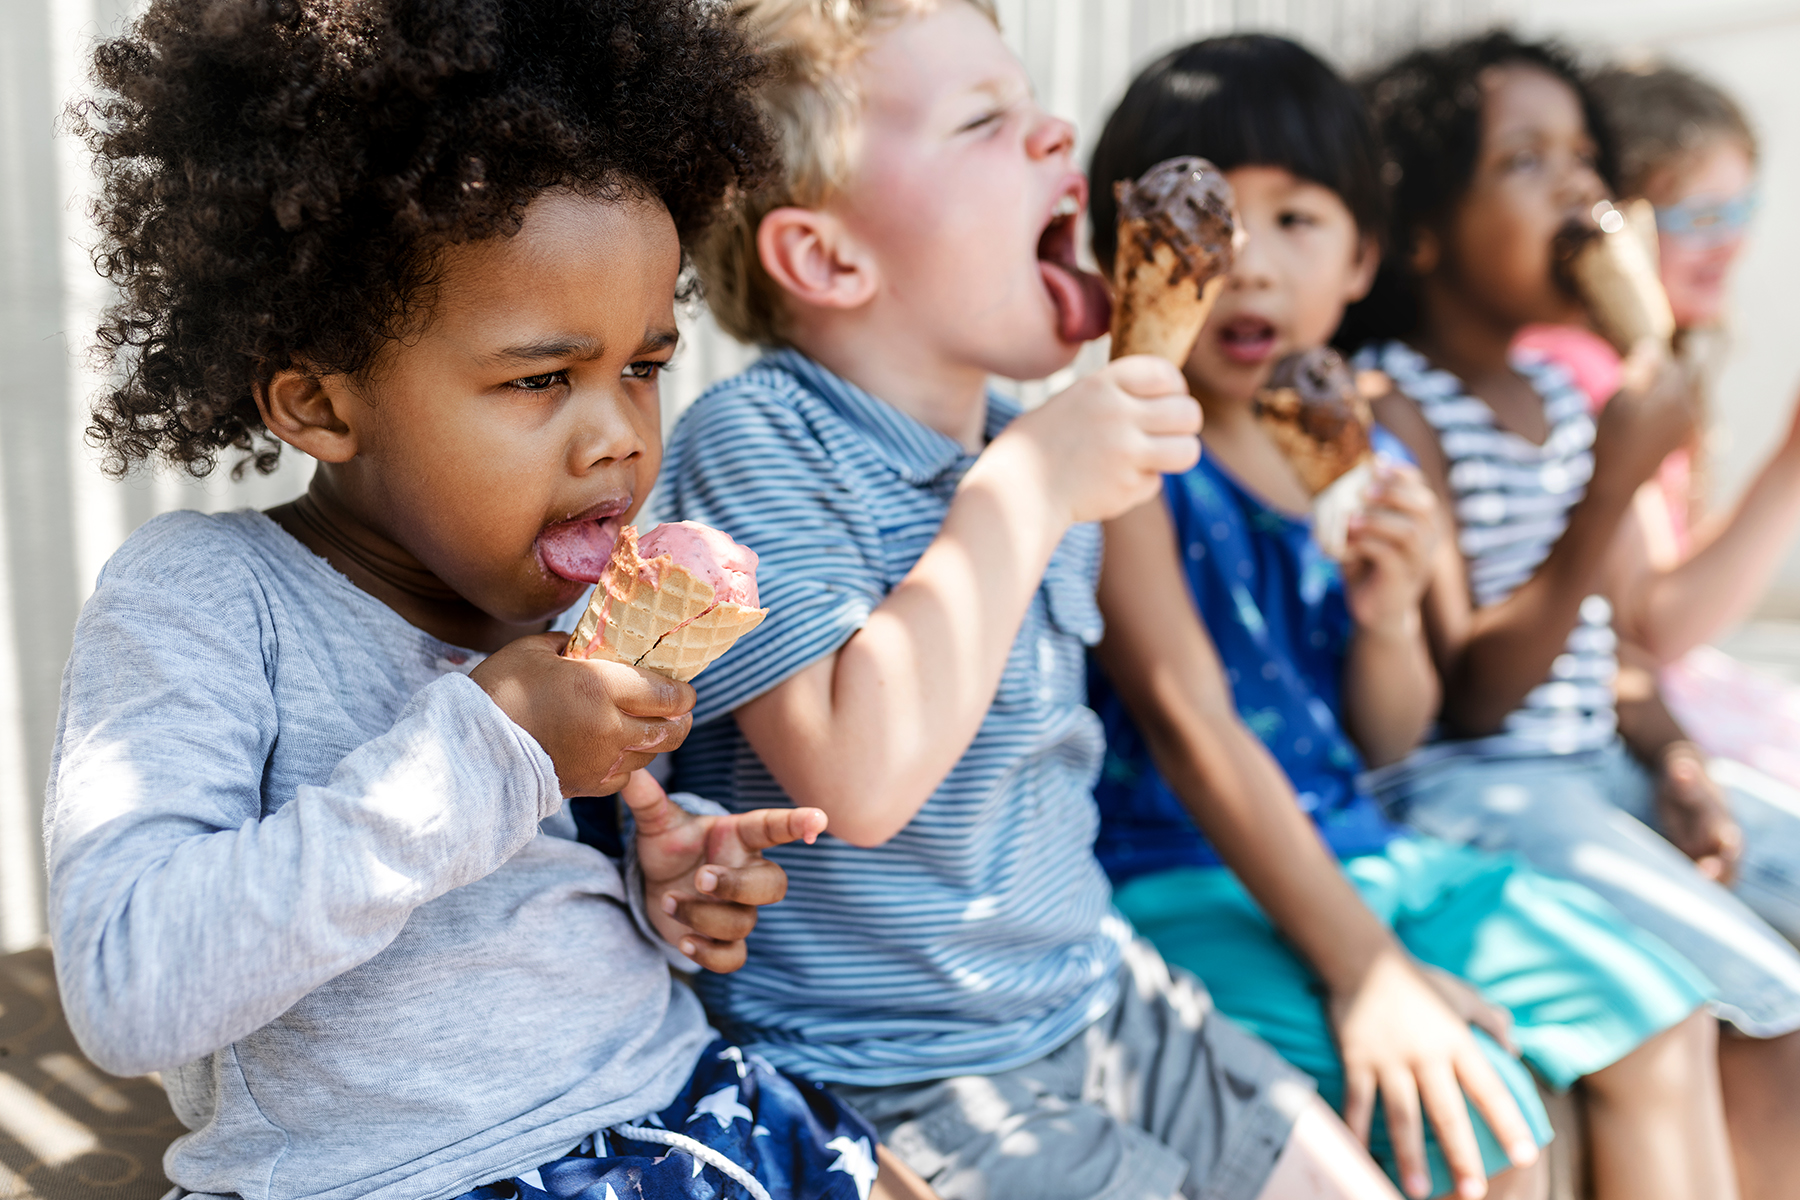 Children eating homemade ice cream